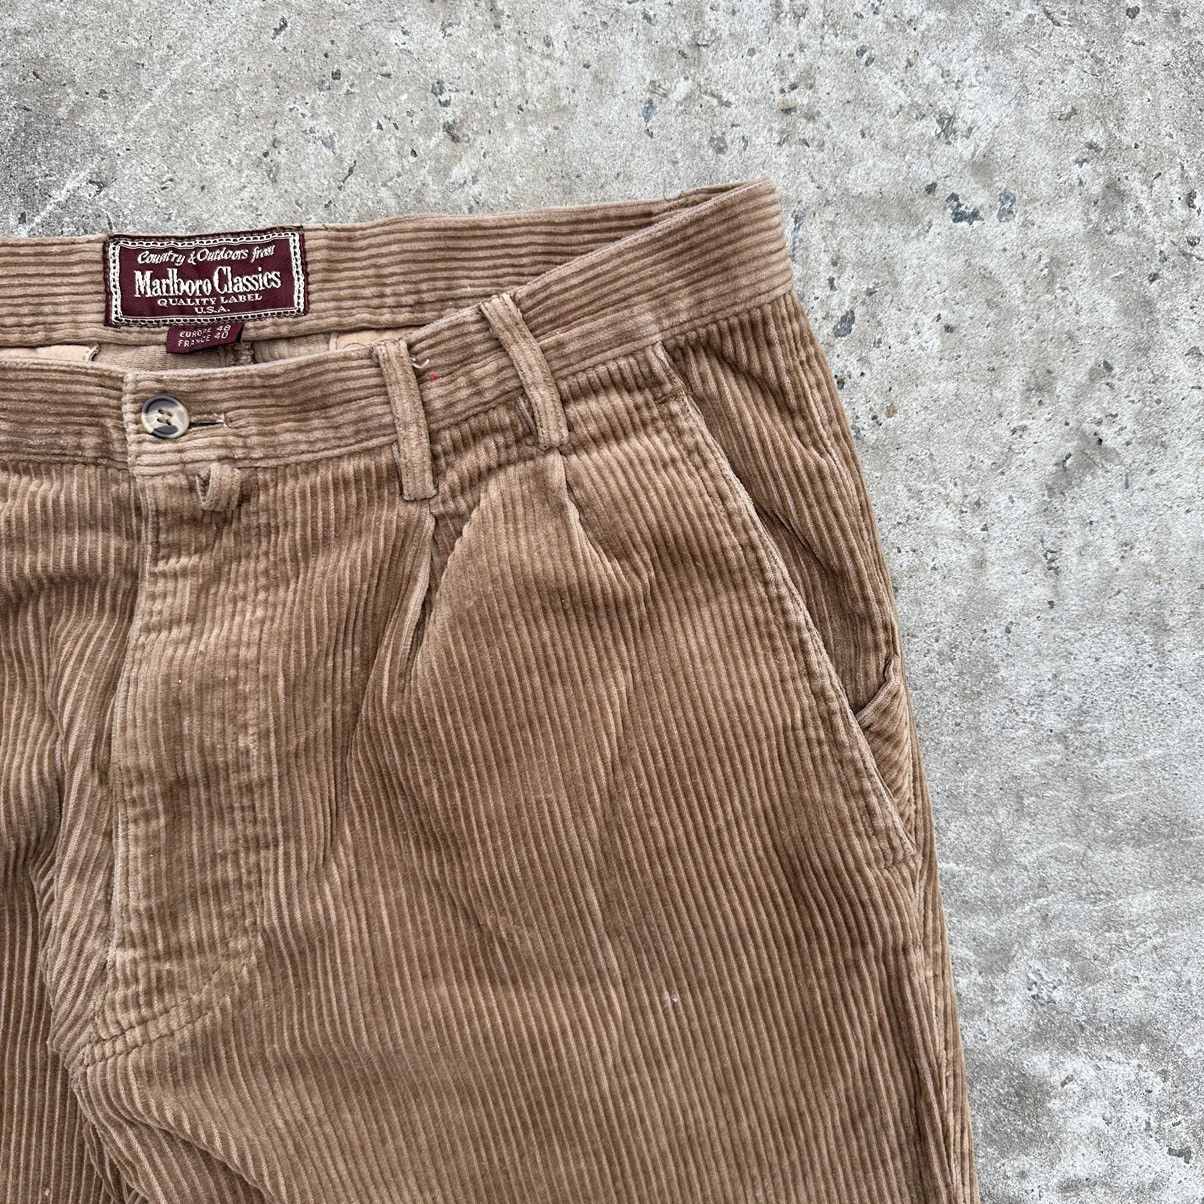 Vintage Vintage Corduroy Pants Marlboro Classic velveteen 90s Size US 32 / EU 48 - 8 Thumbnail